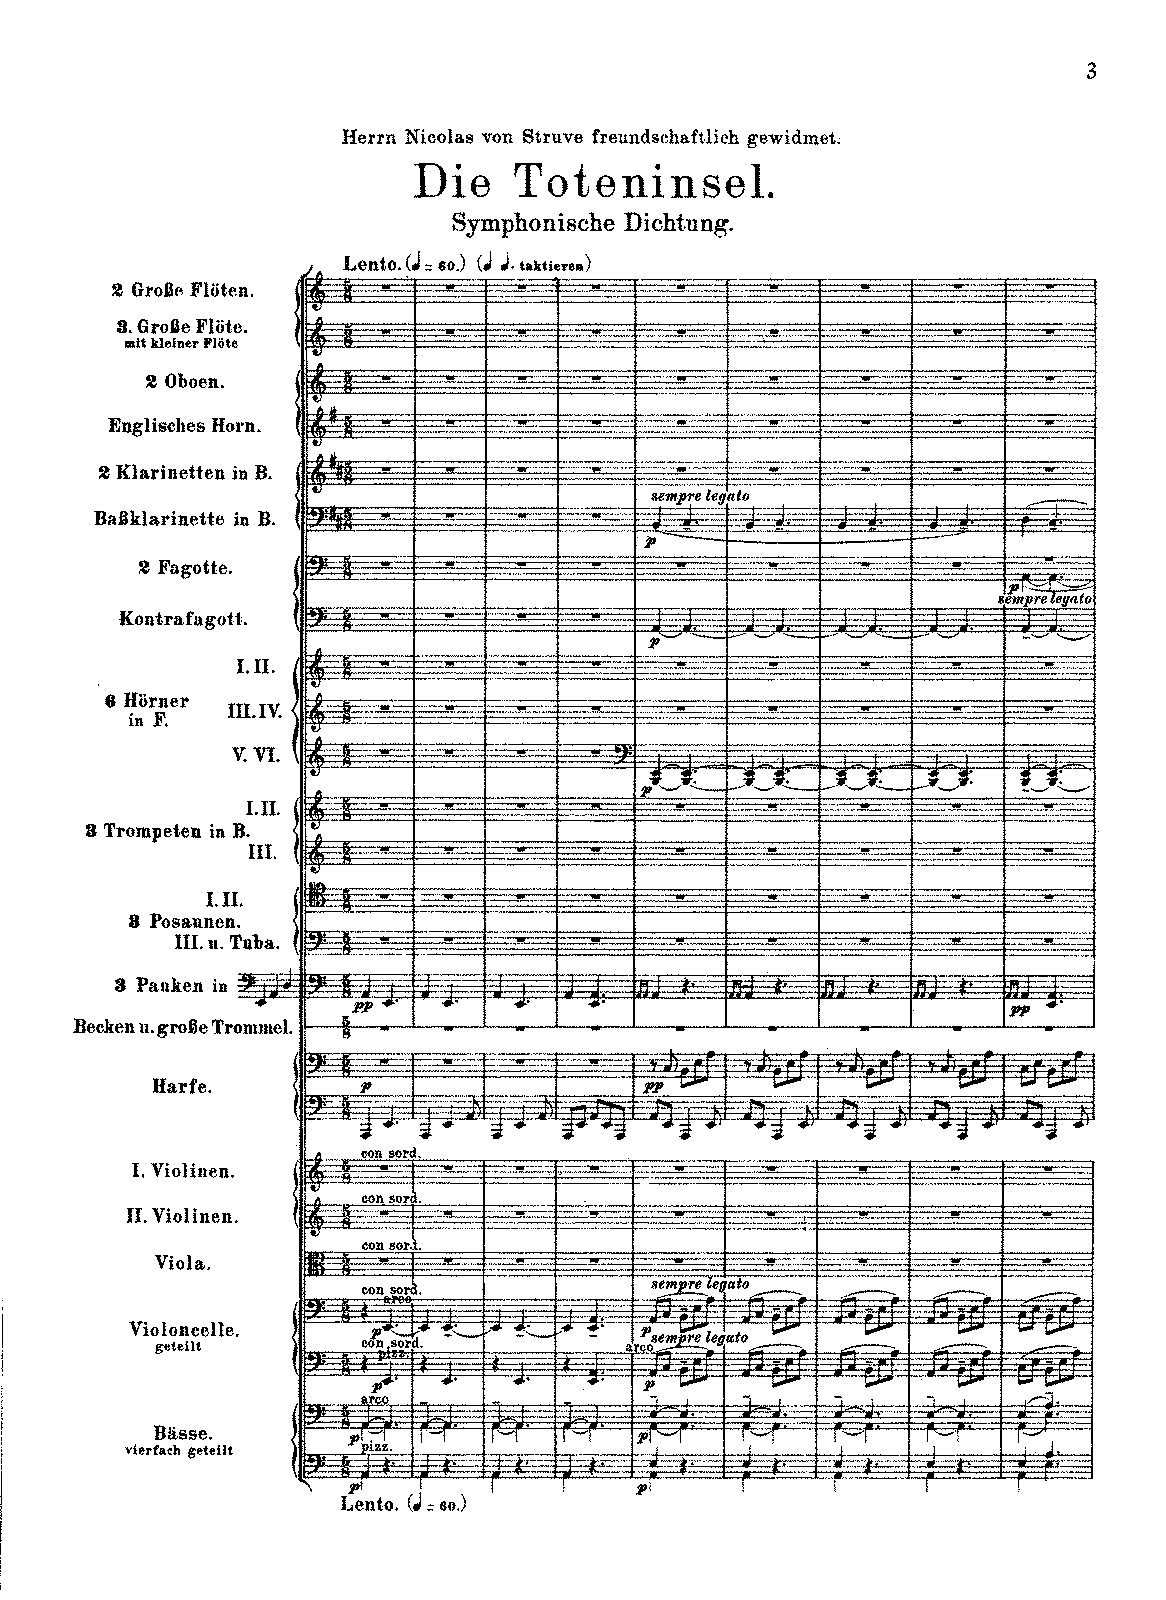 Rachmaninov, op. 29